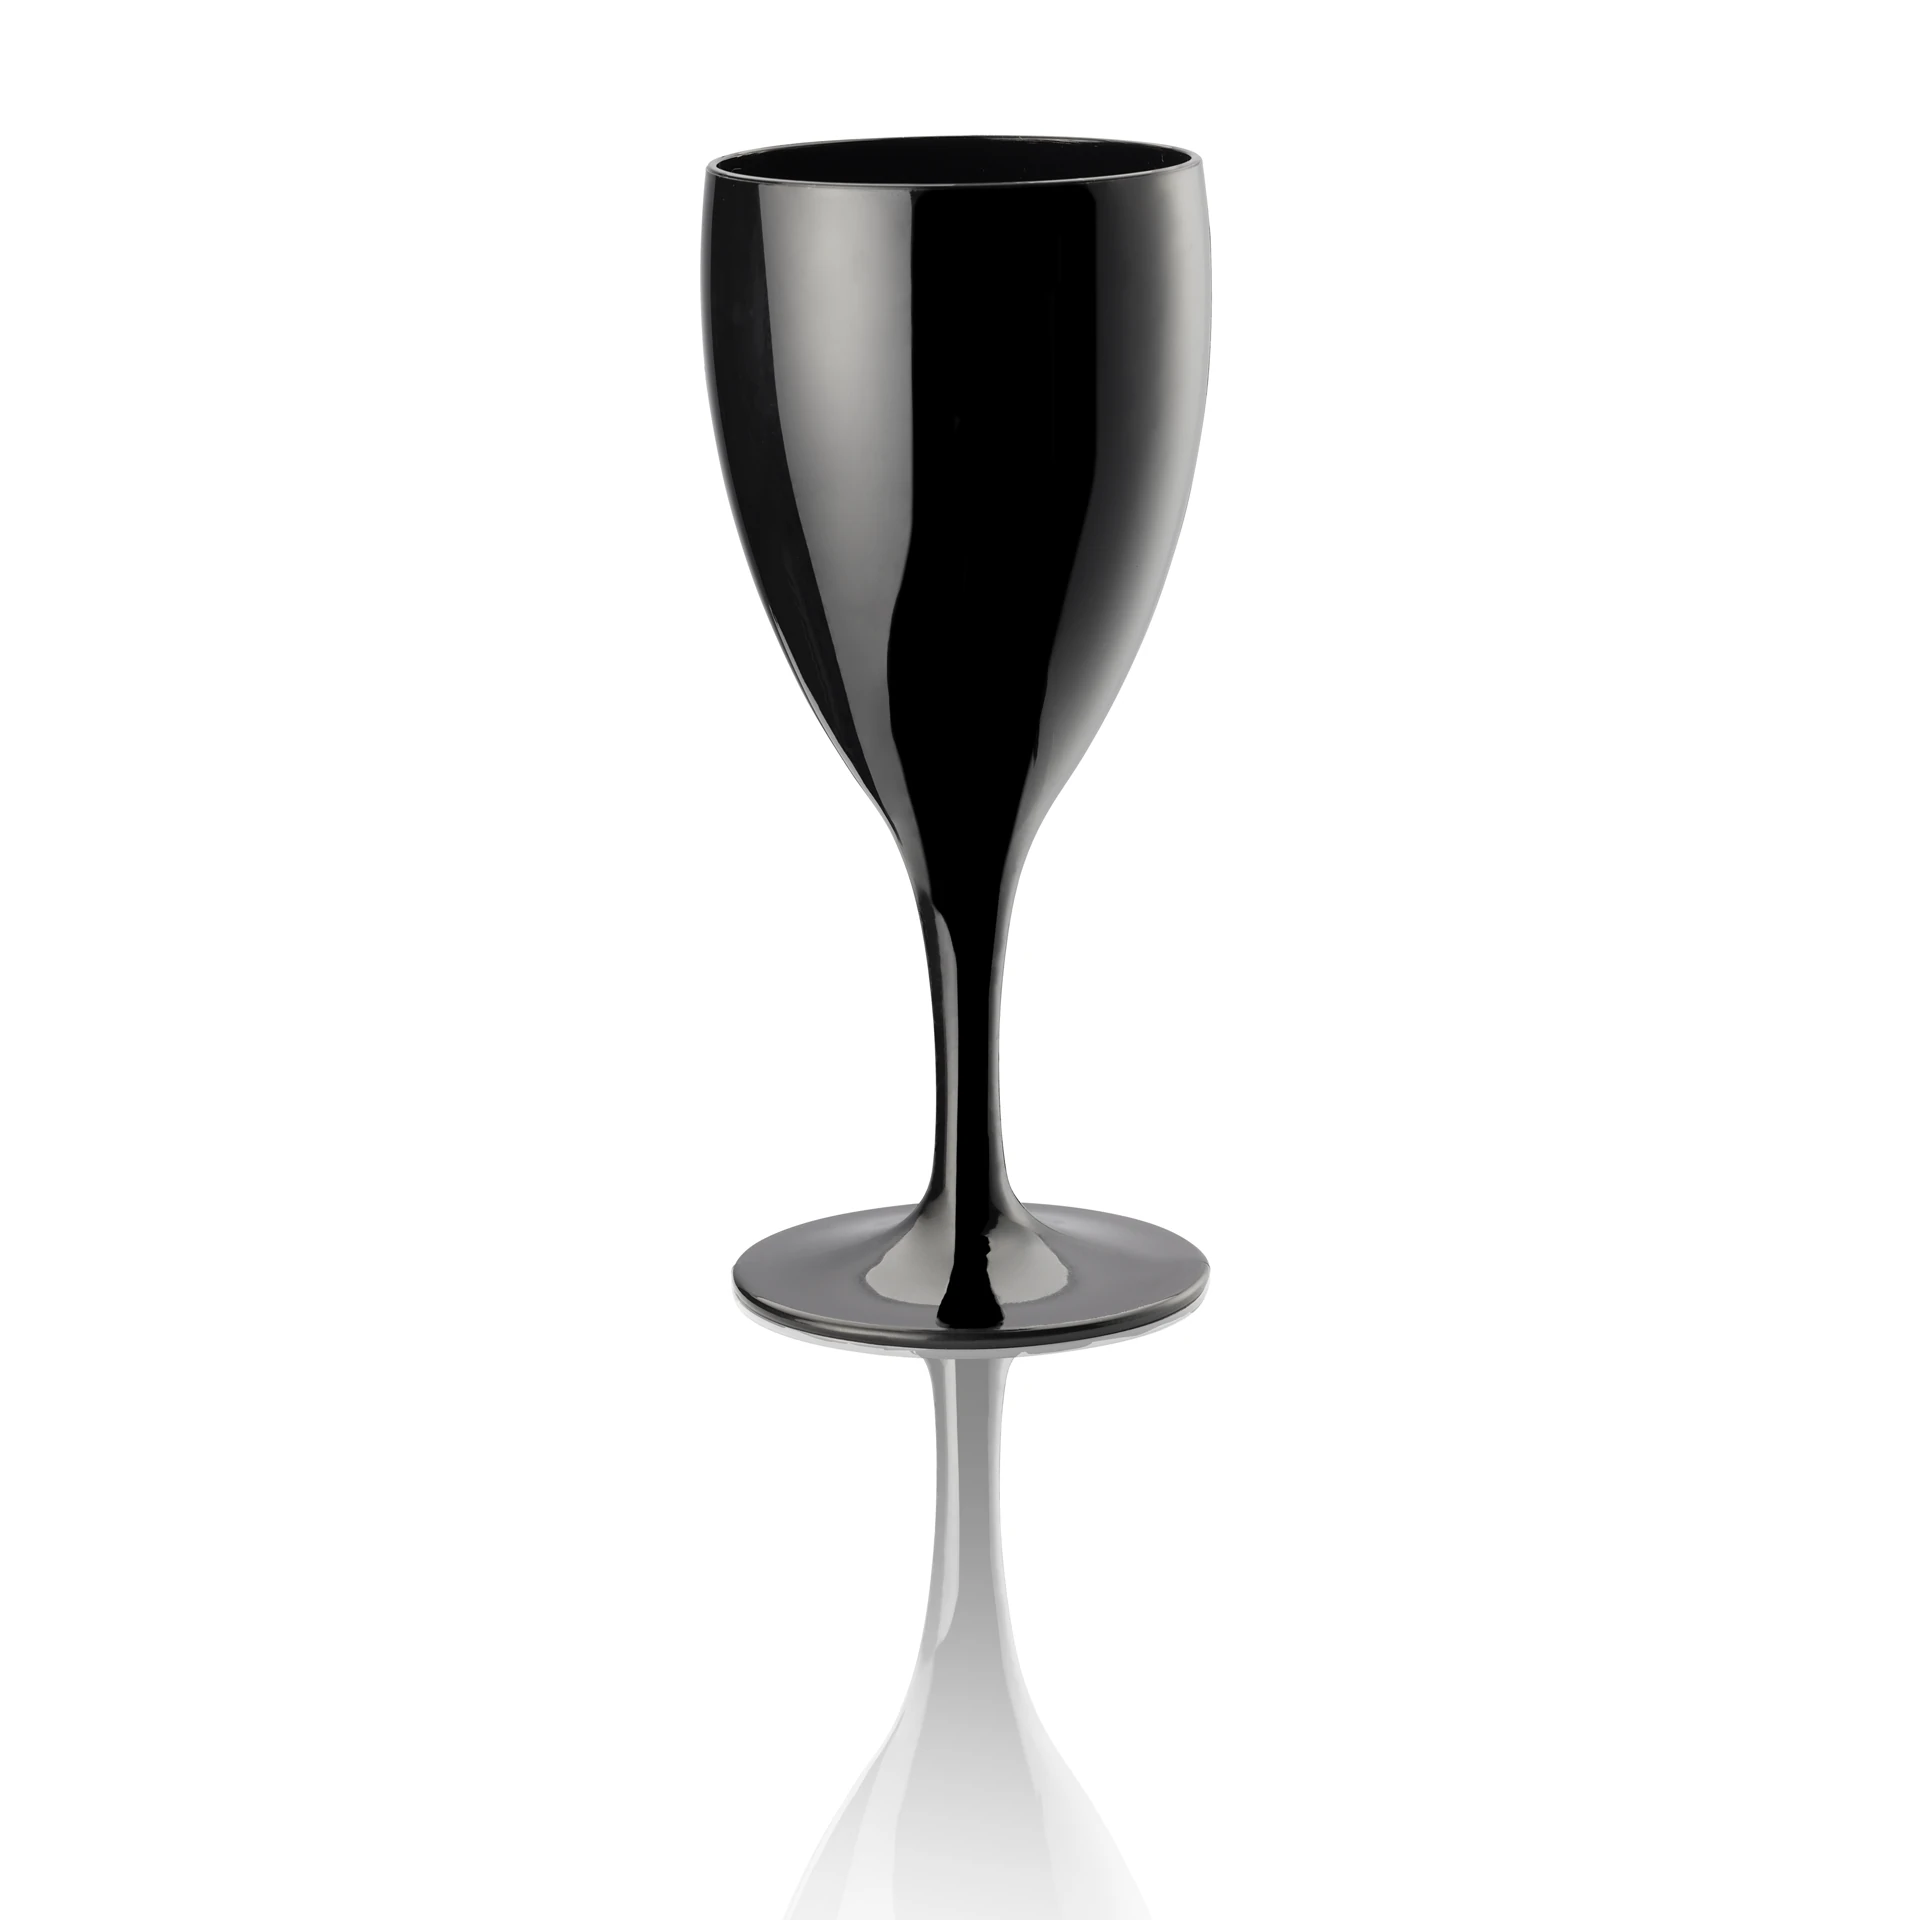 Sparkling wine glass